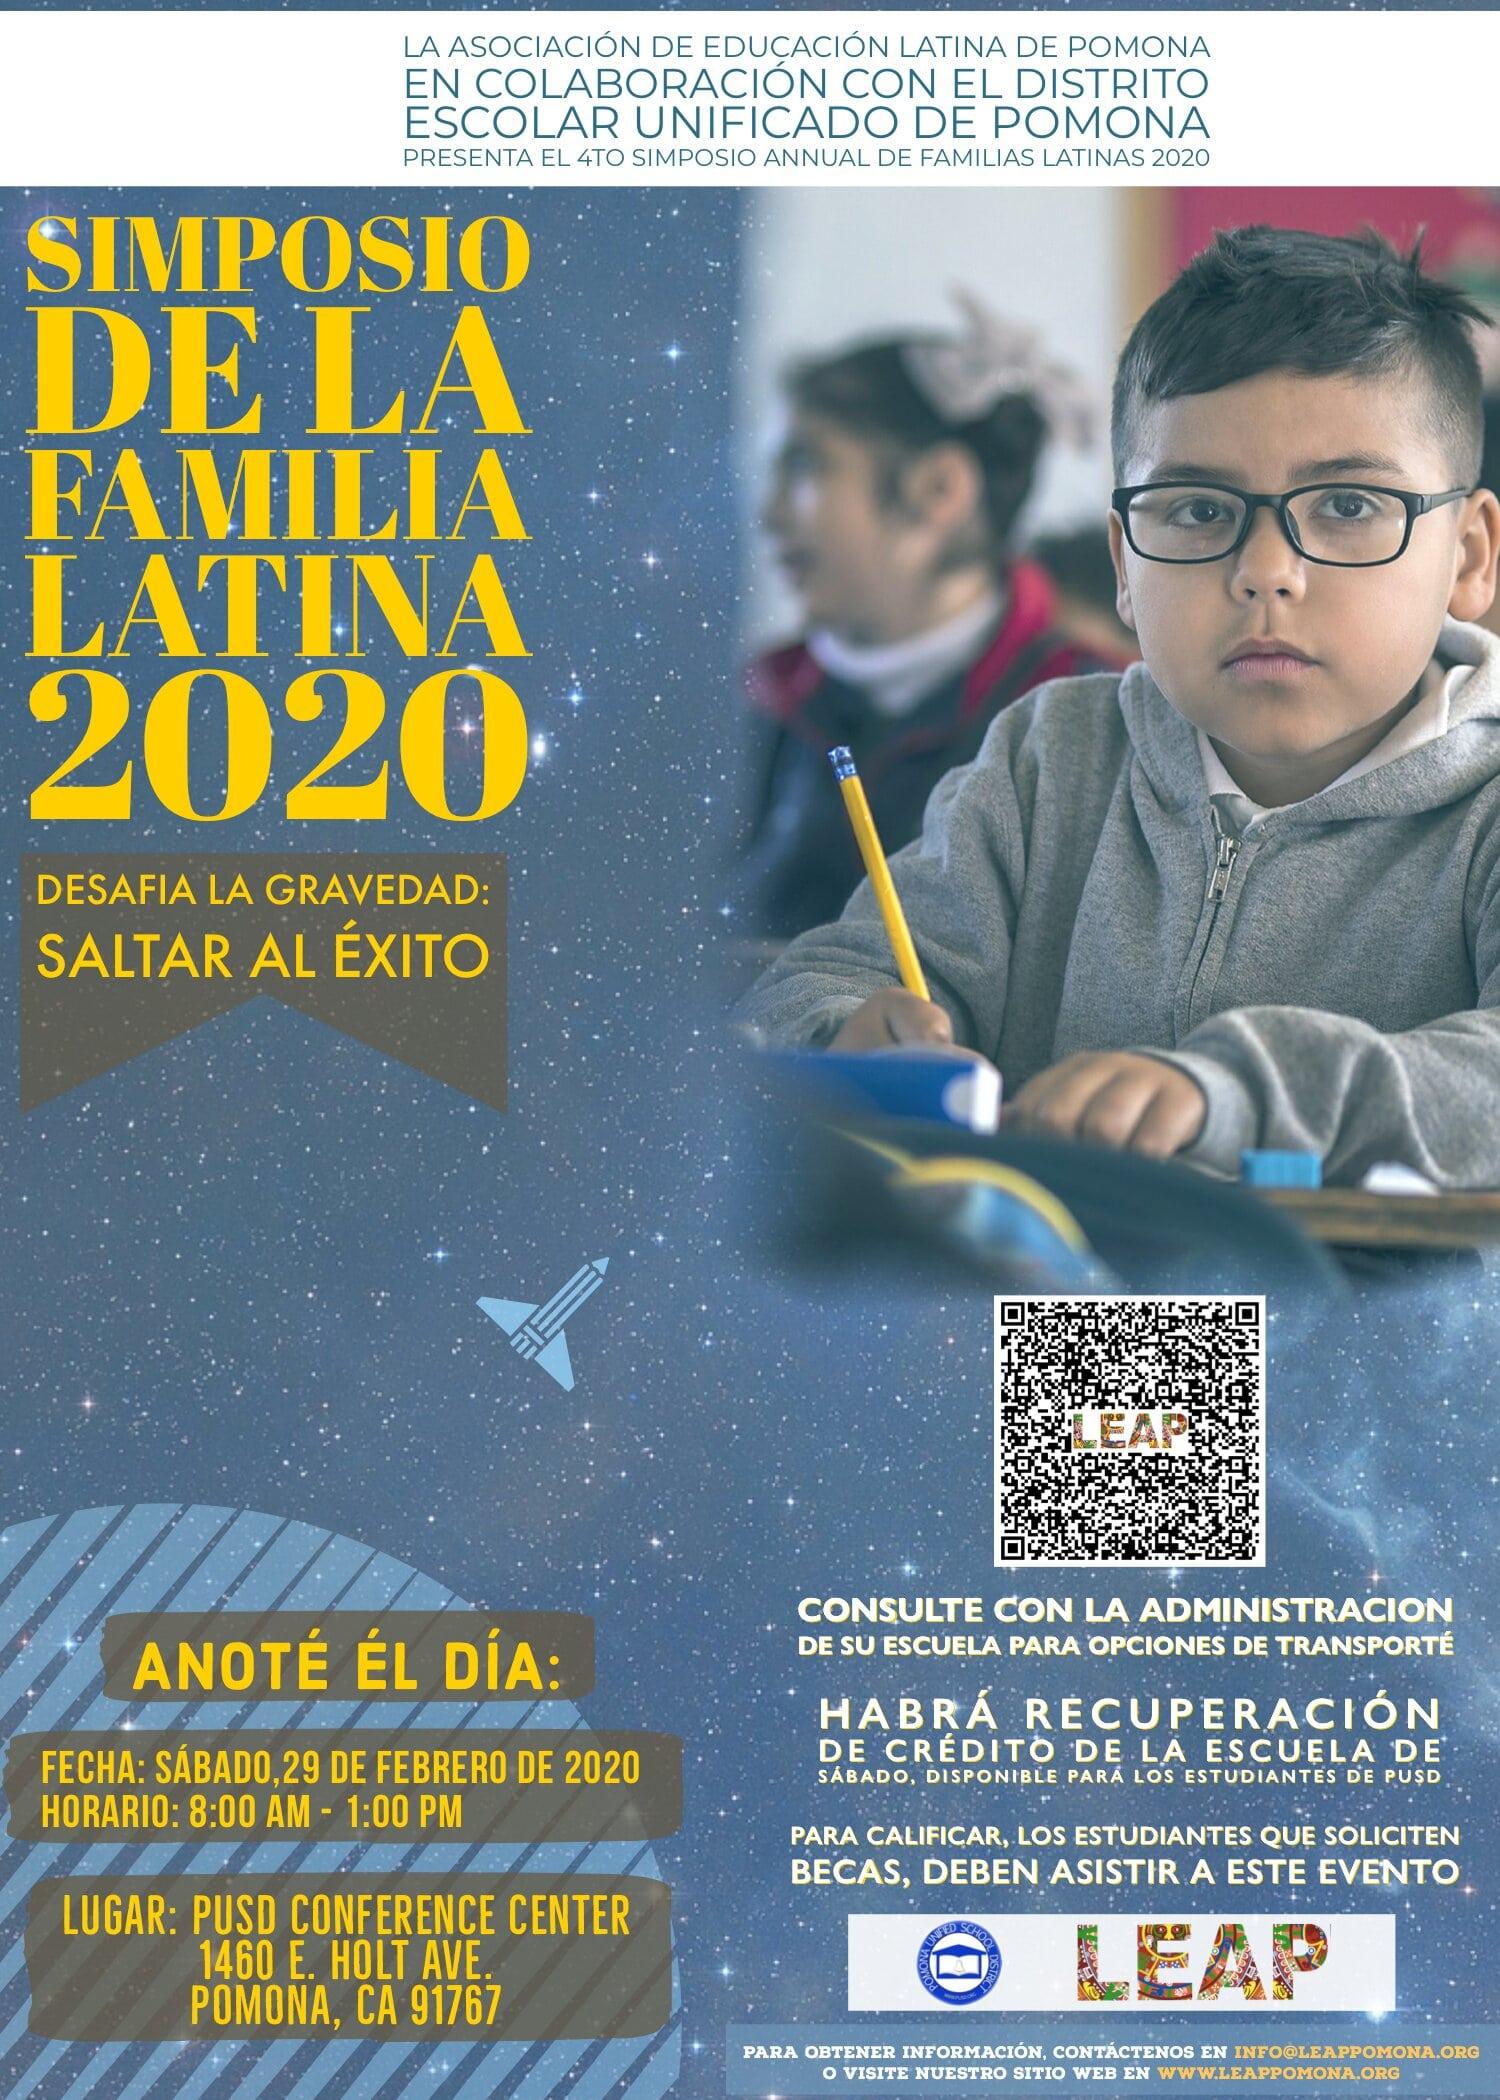 Spanish Flyer Latino Family Symposium